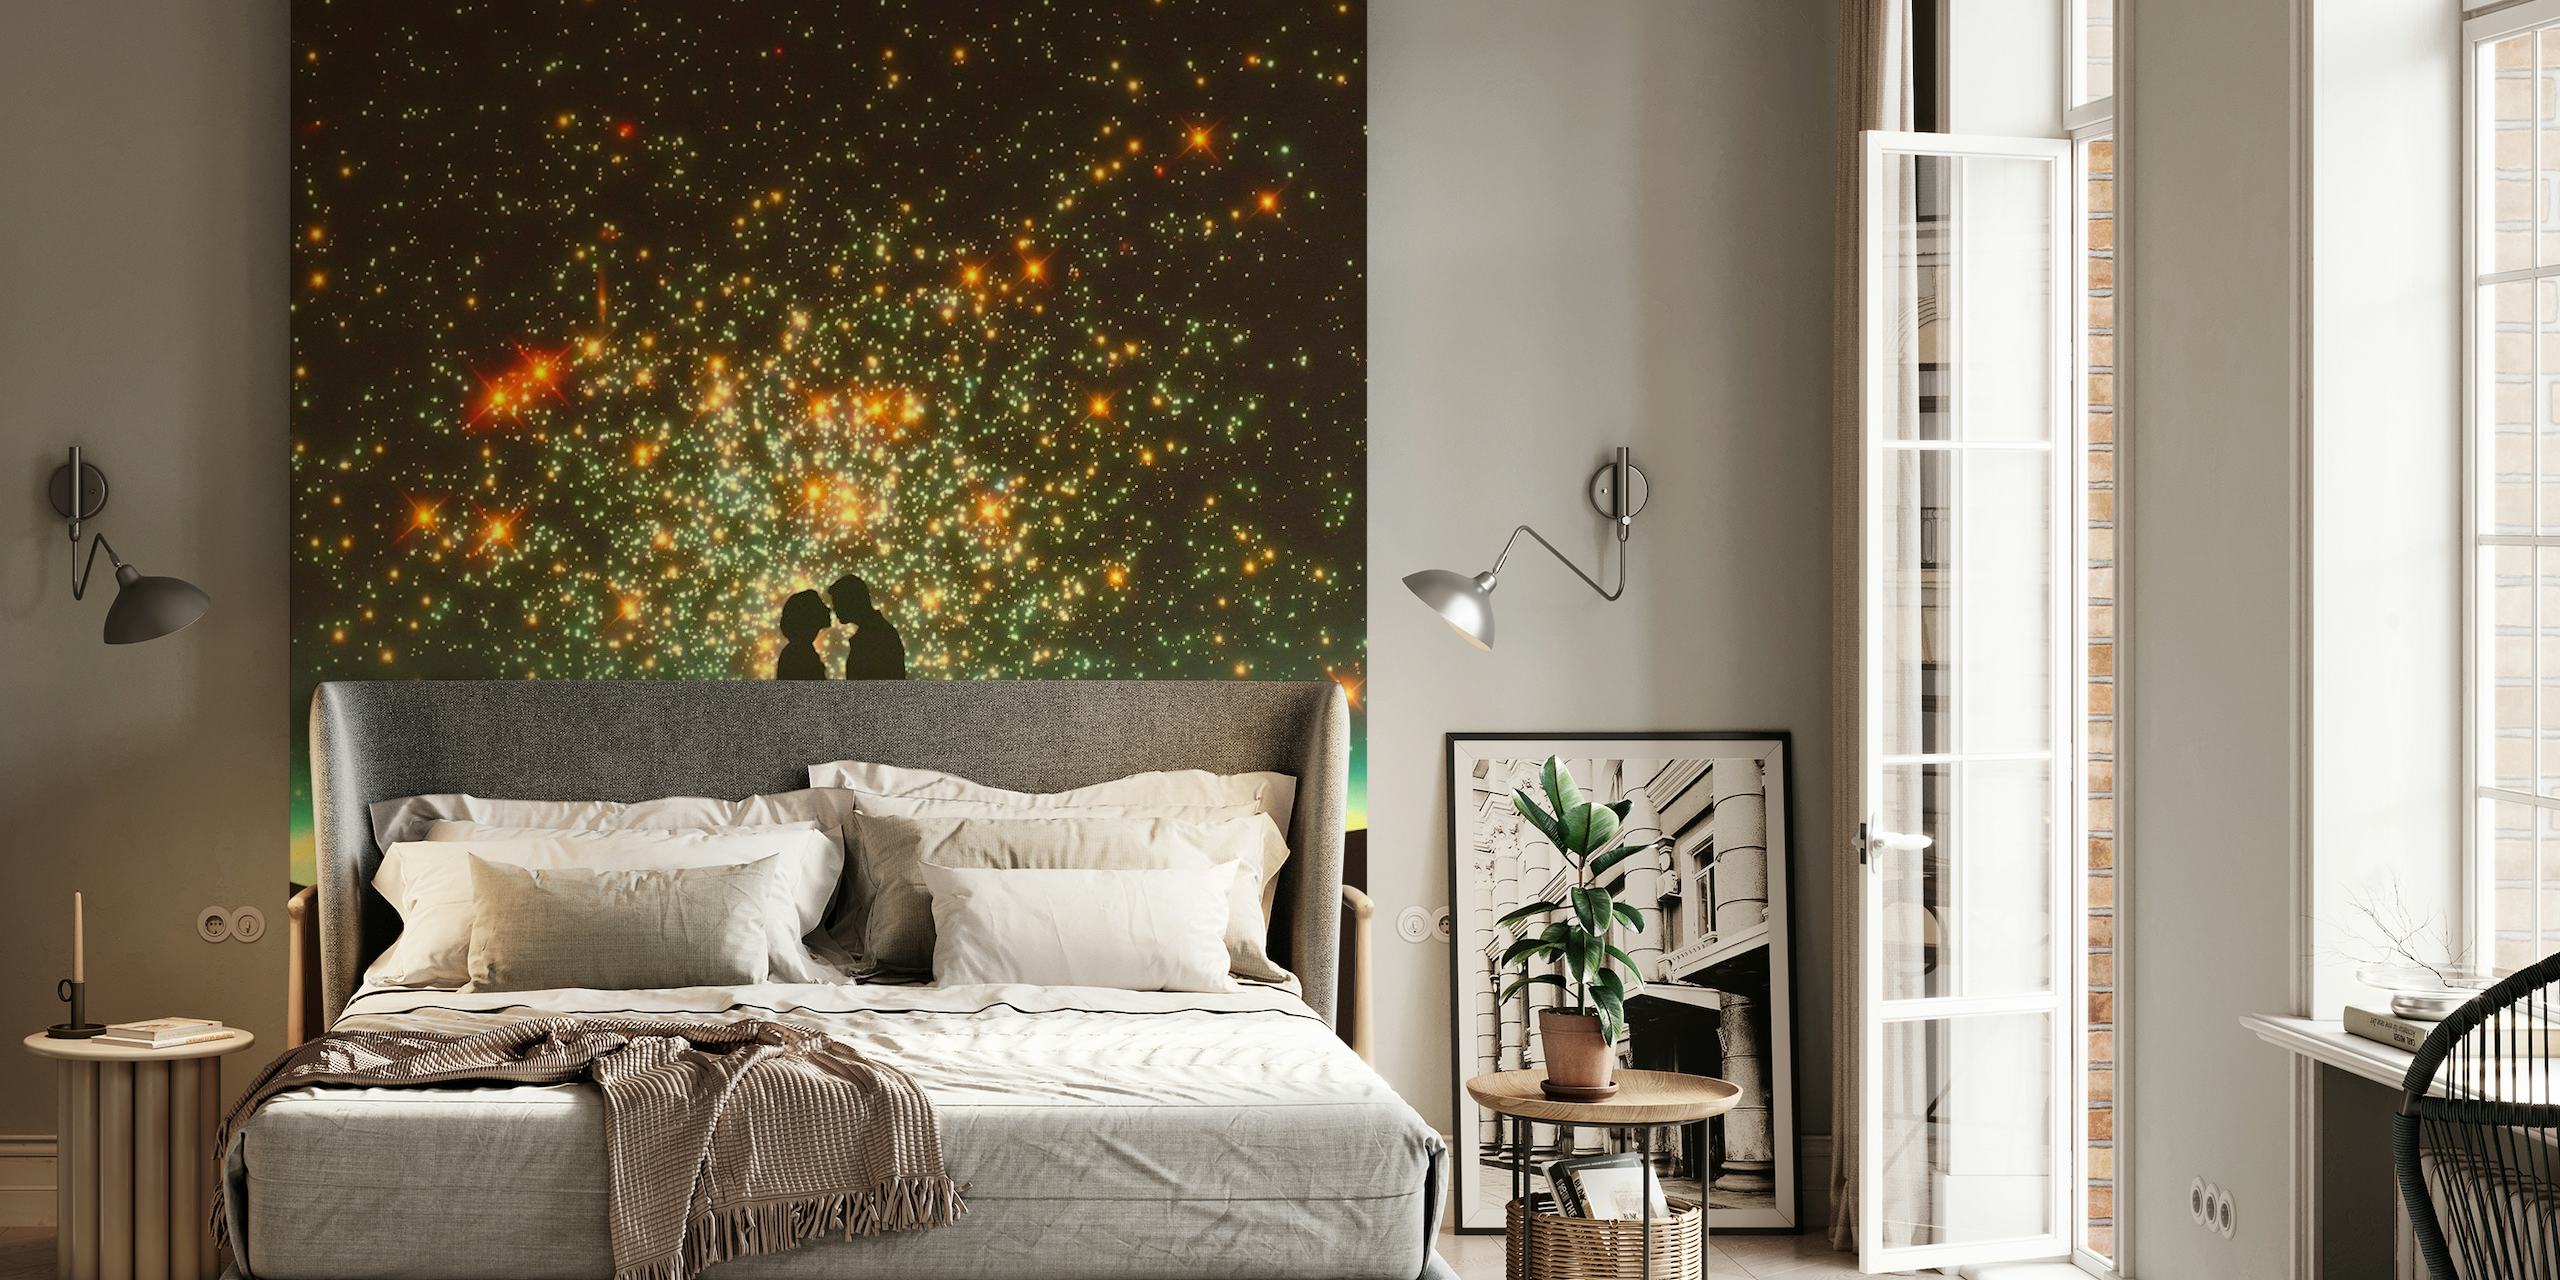 A Cosmic Kiss wallpaper